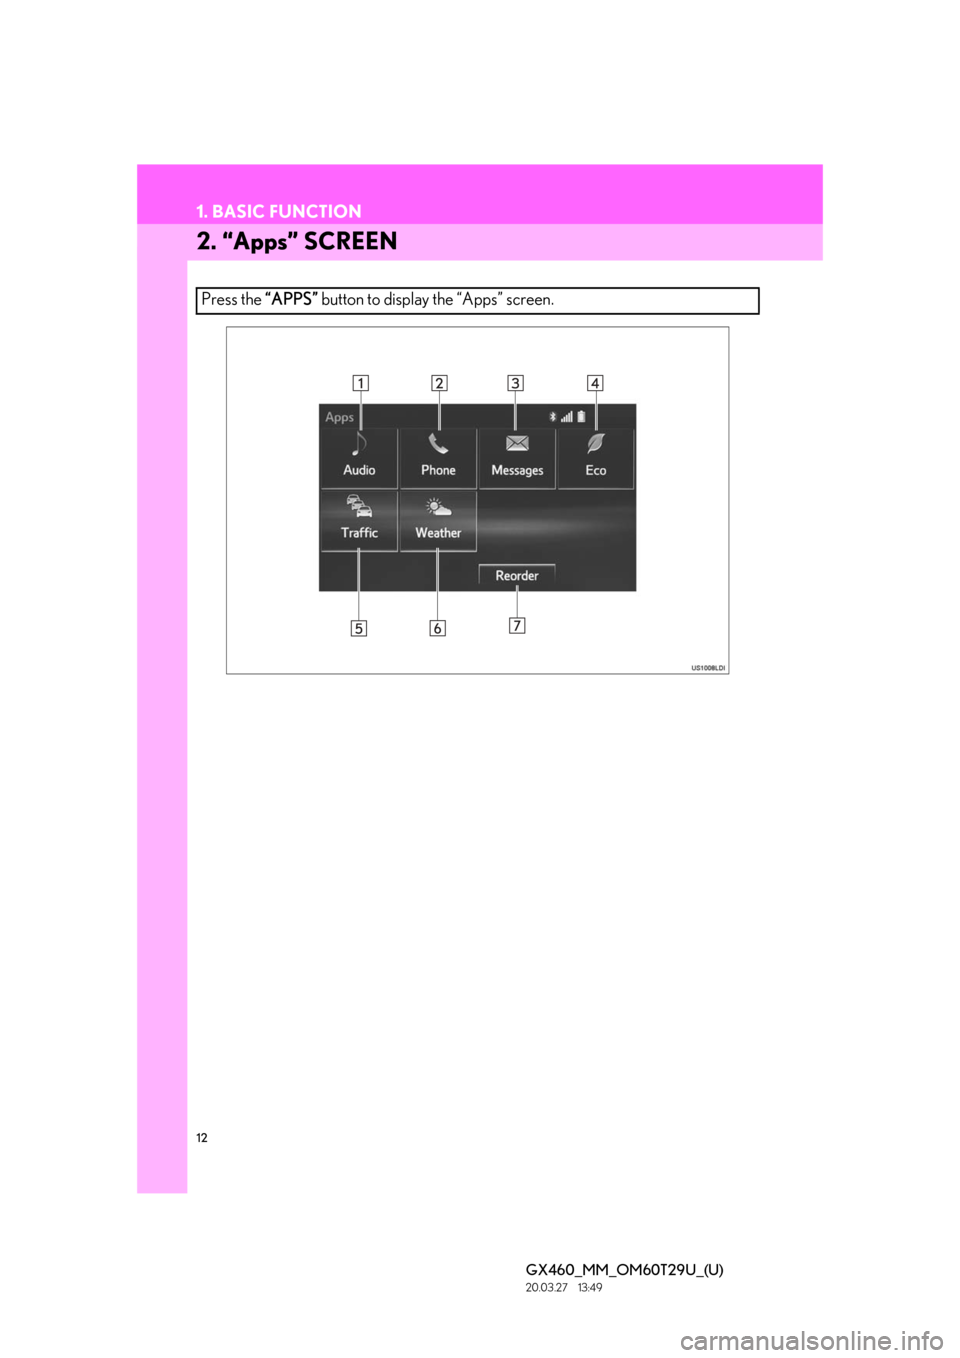 Lexus GX460 2021  Owners Manual / LEXUS 2021 GX460 MULTIMEDIA OWNERS MANUAL (OM60T29U) 12
1. BASIC FUNCTION
GX460_MM_OM60T29U_(U)20.03.27     13:49
2. “Apps” SCREEN
Press the “APPS” button to display the “Apps” screen. 